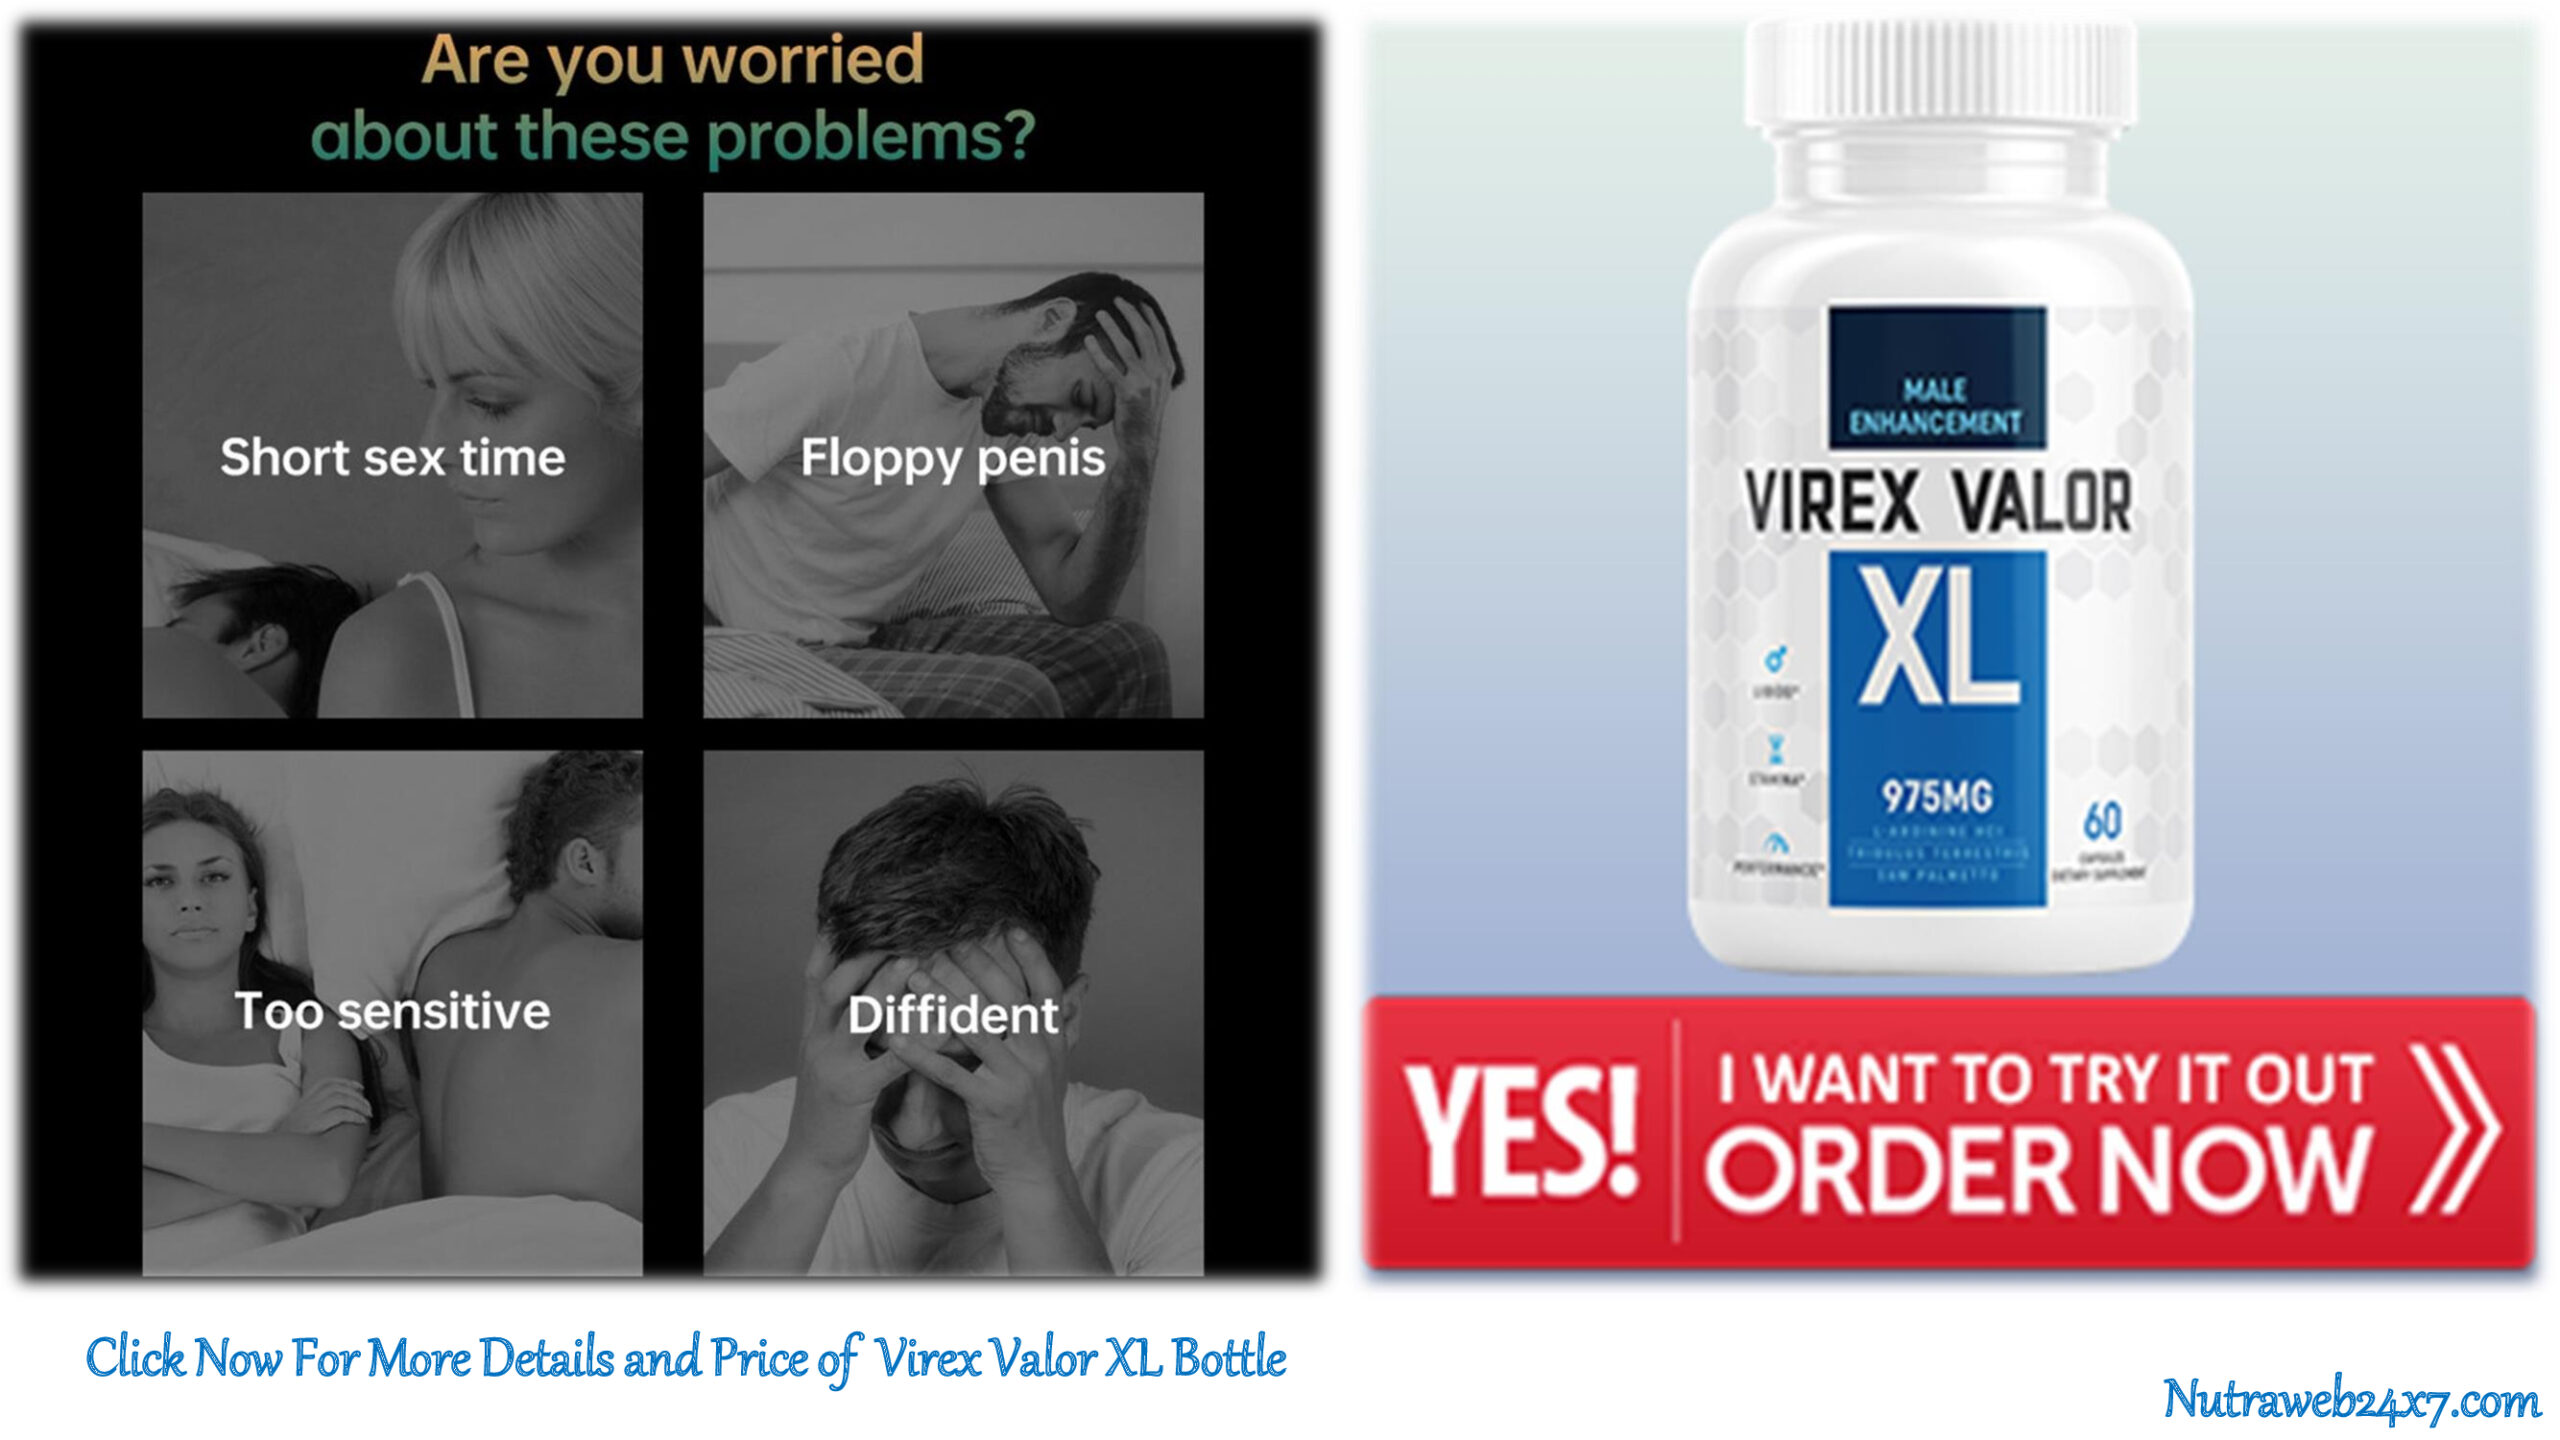 Virex Valor XL